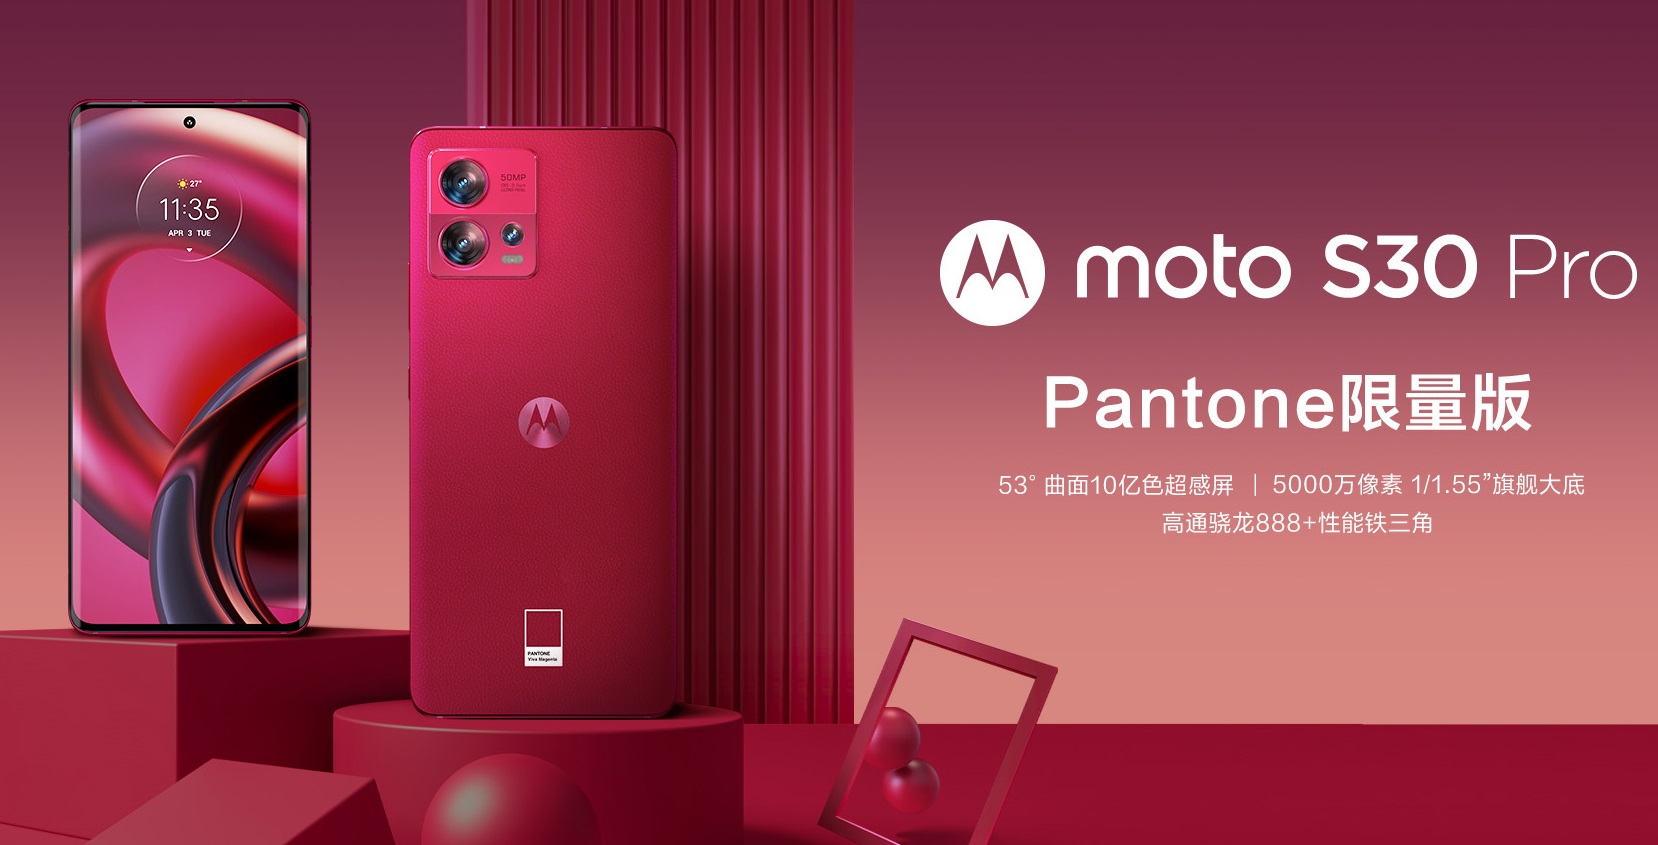 Moto S30 Pro Pantone Limited Edition